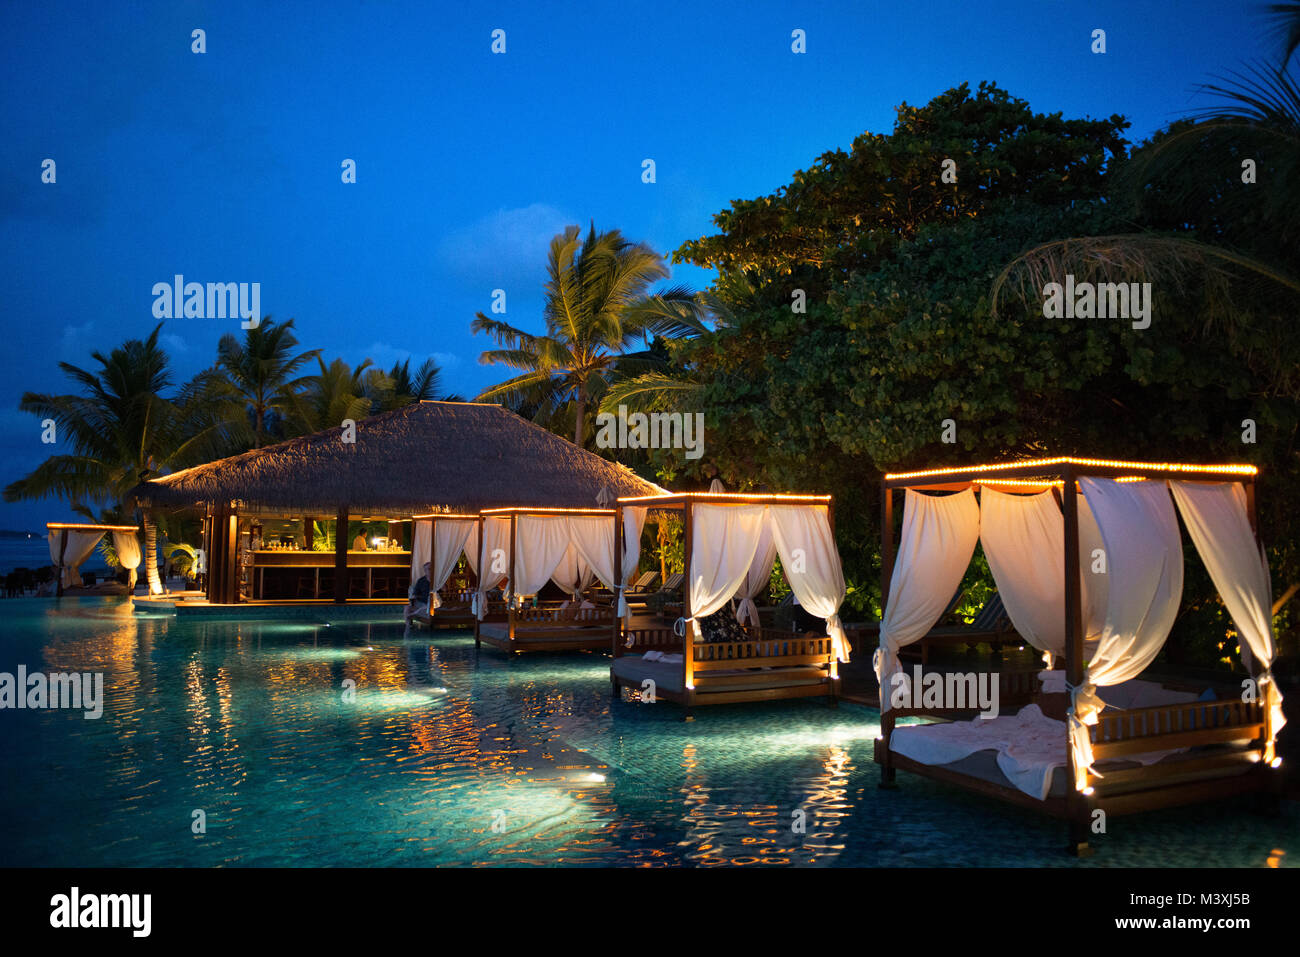 Swimming pool and restaurant in The Residence Hotel and Resort, Gaafu Alifu Atoll. Maldives Islands. Stock Photo